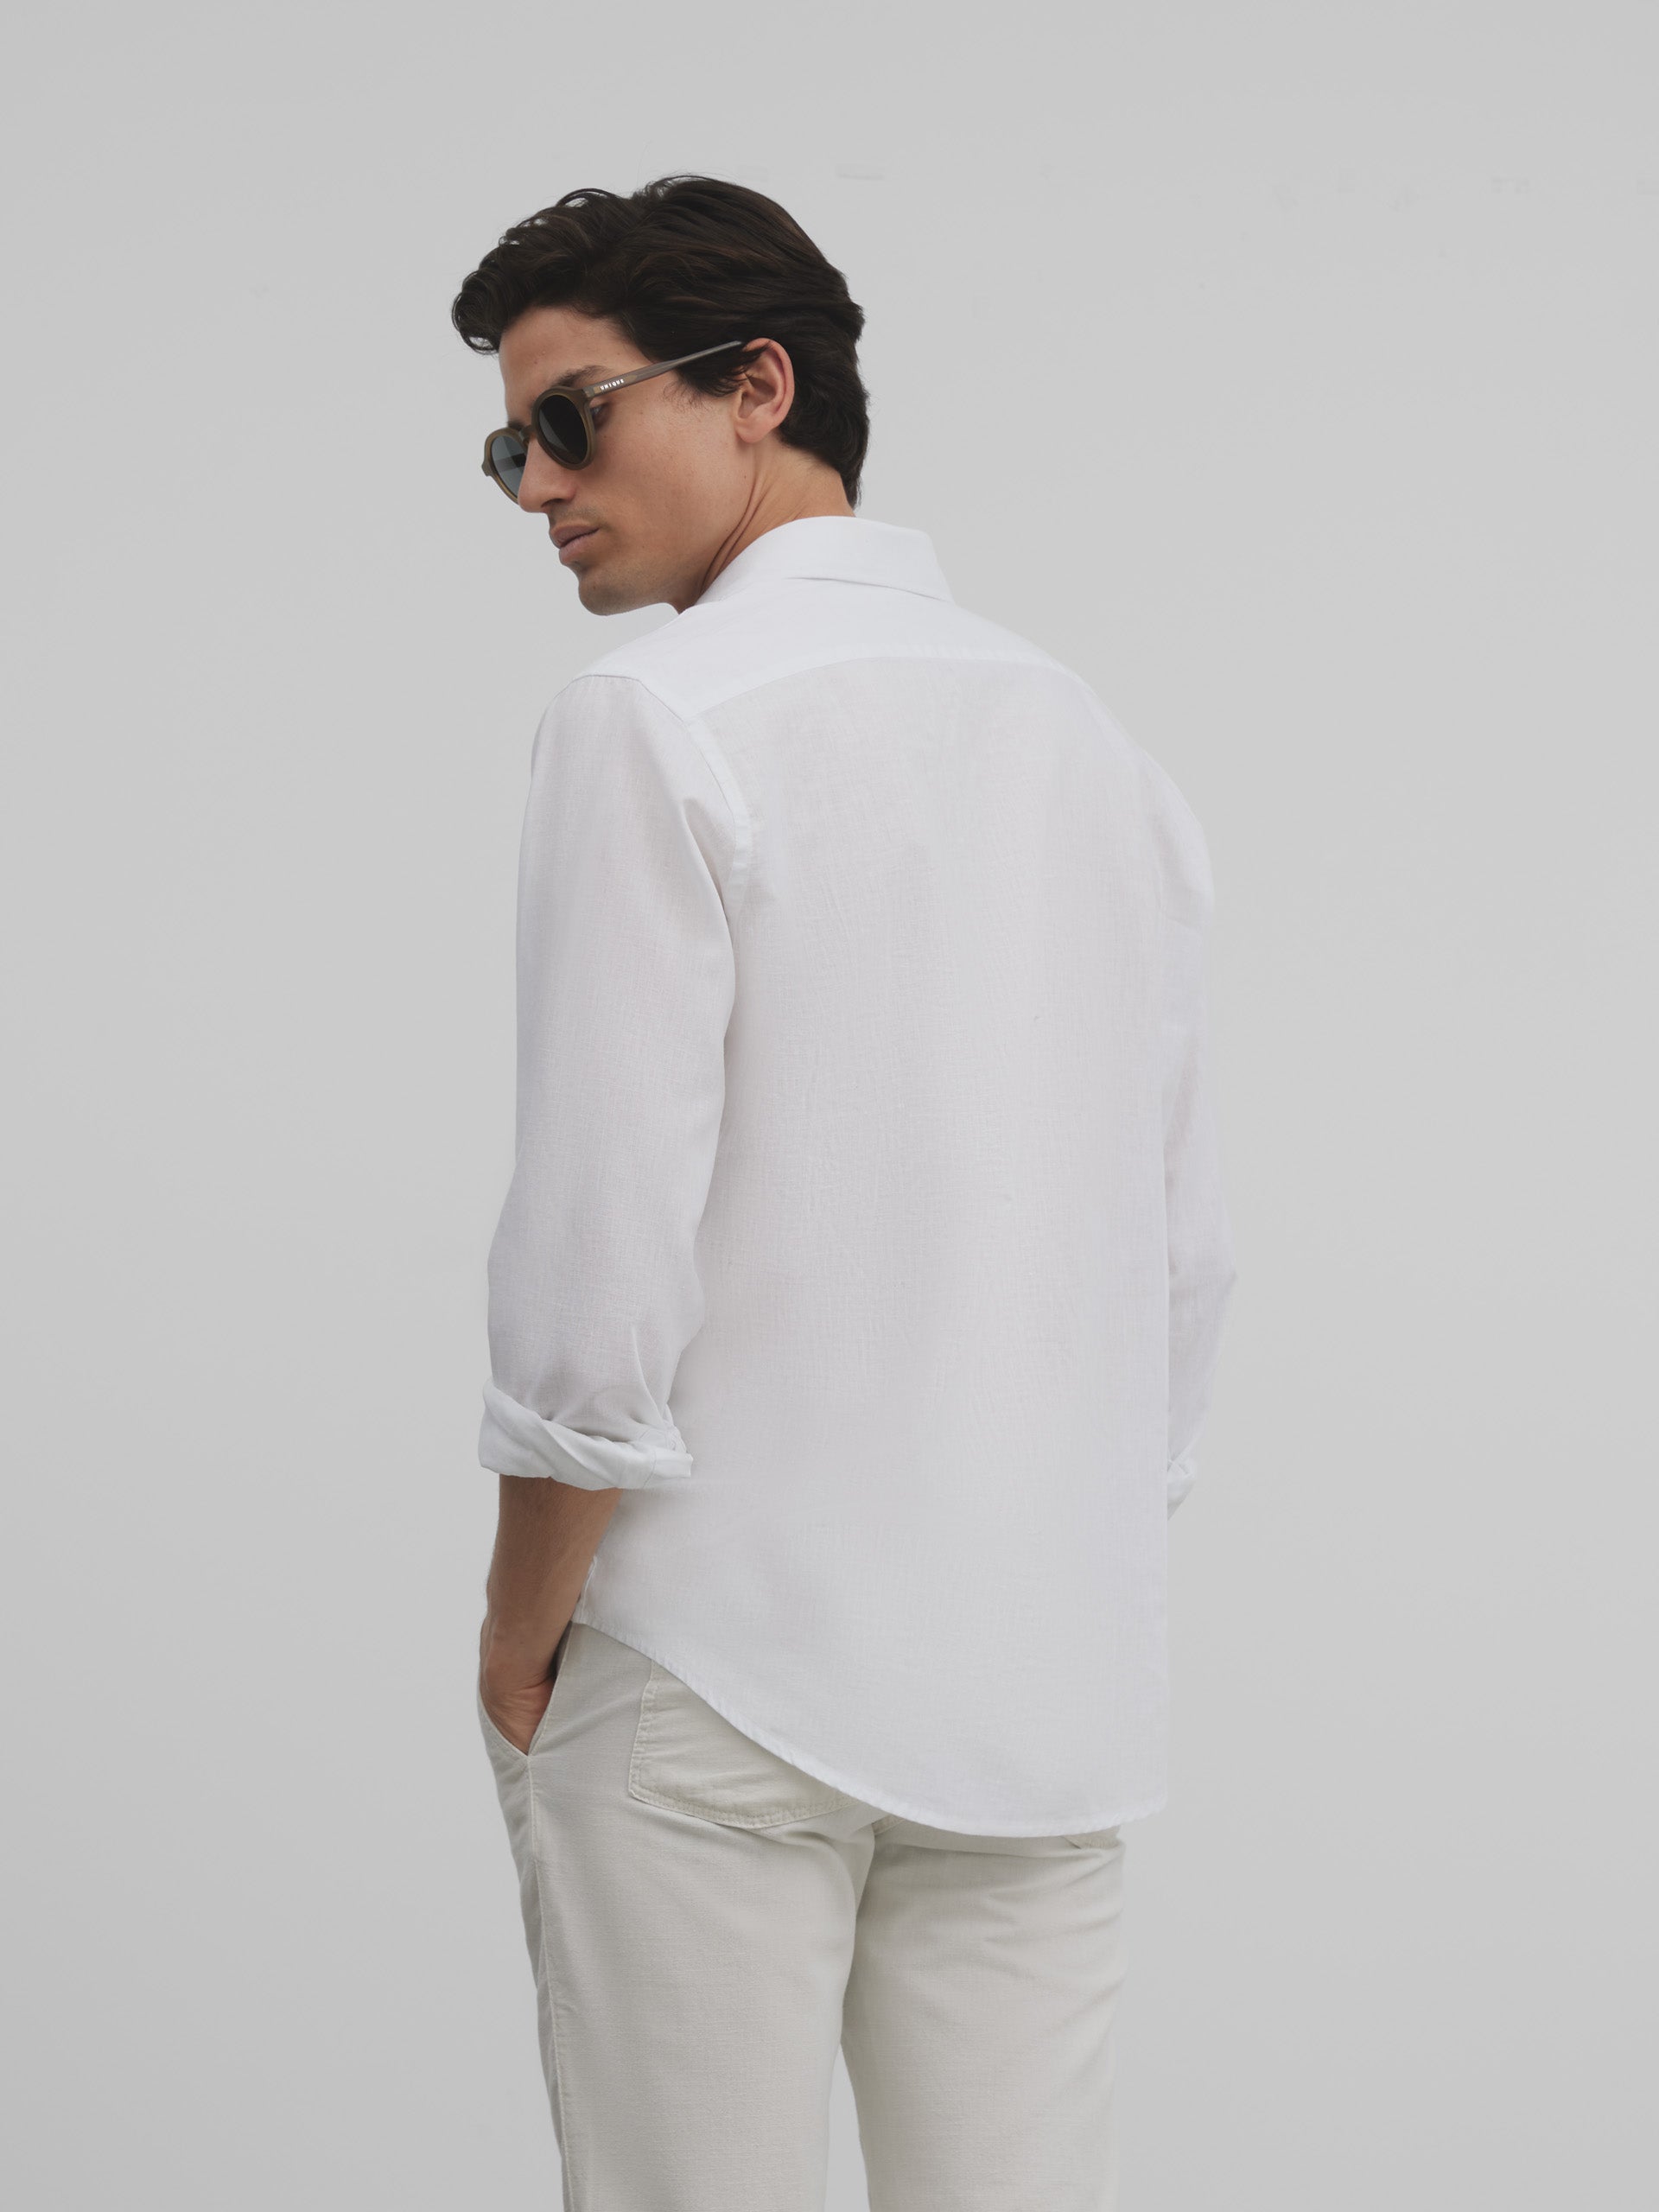 Silbon soft white sport shirt